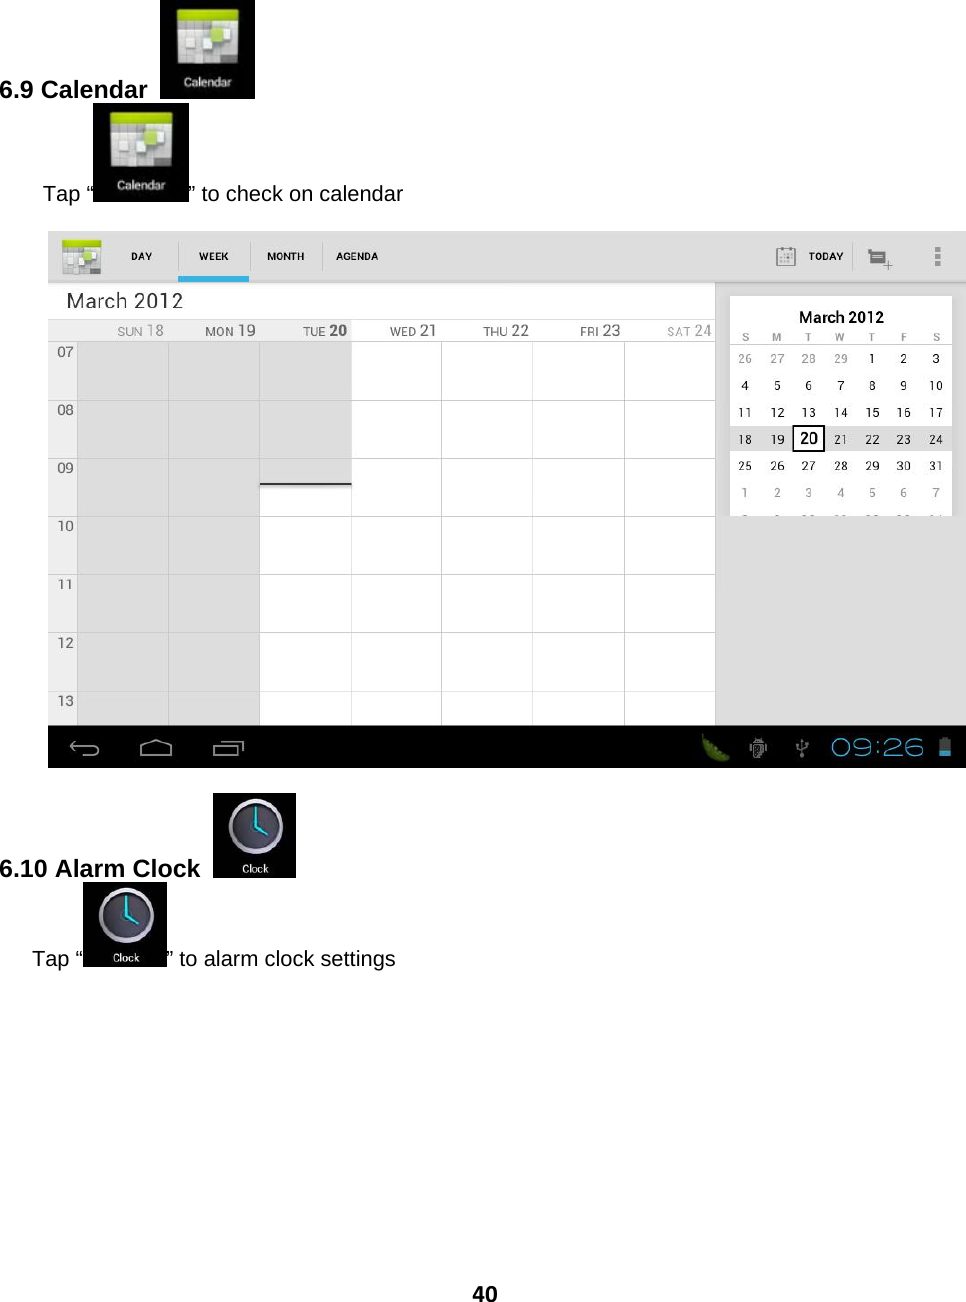 406.9 Calendar   Tap “ ” to check on calendar      6.10 Alarm Clock   Tap “ ” to alarm clock settings 